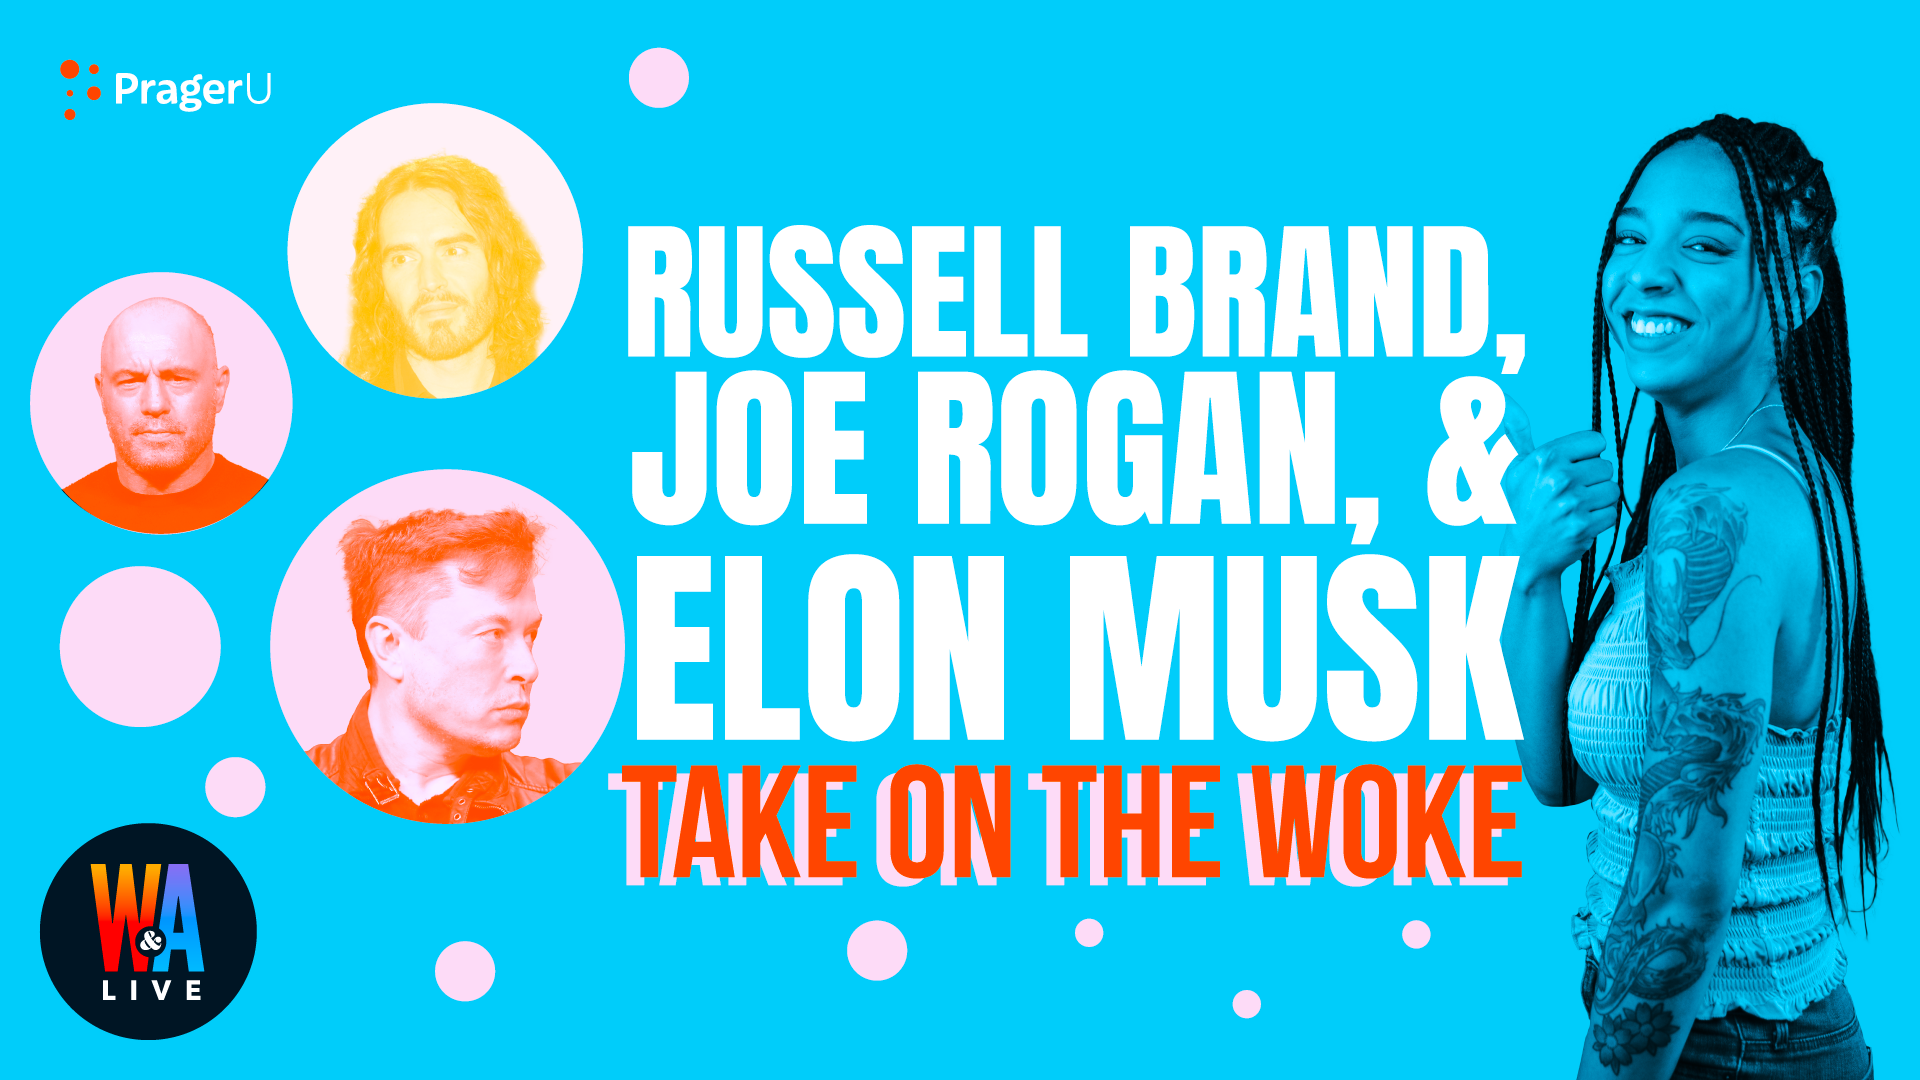 Russell Brand, Joe Rogan, & Elon Musk Take On the Woke: 3/14/2022